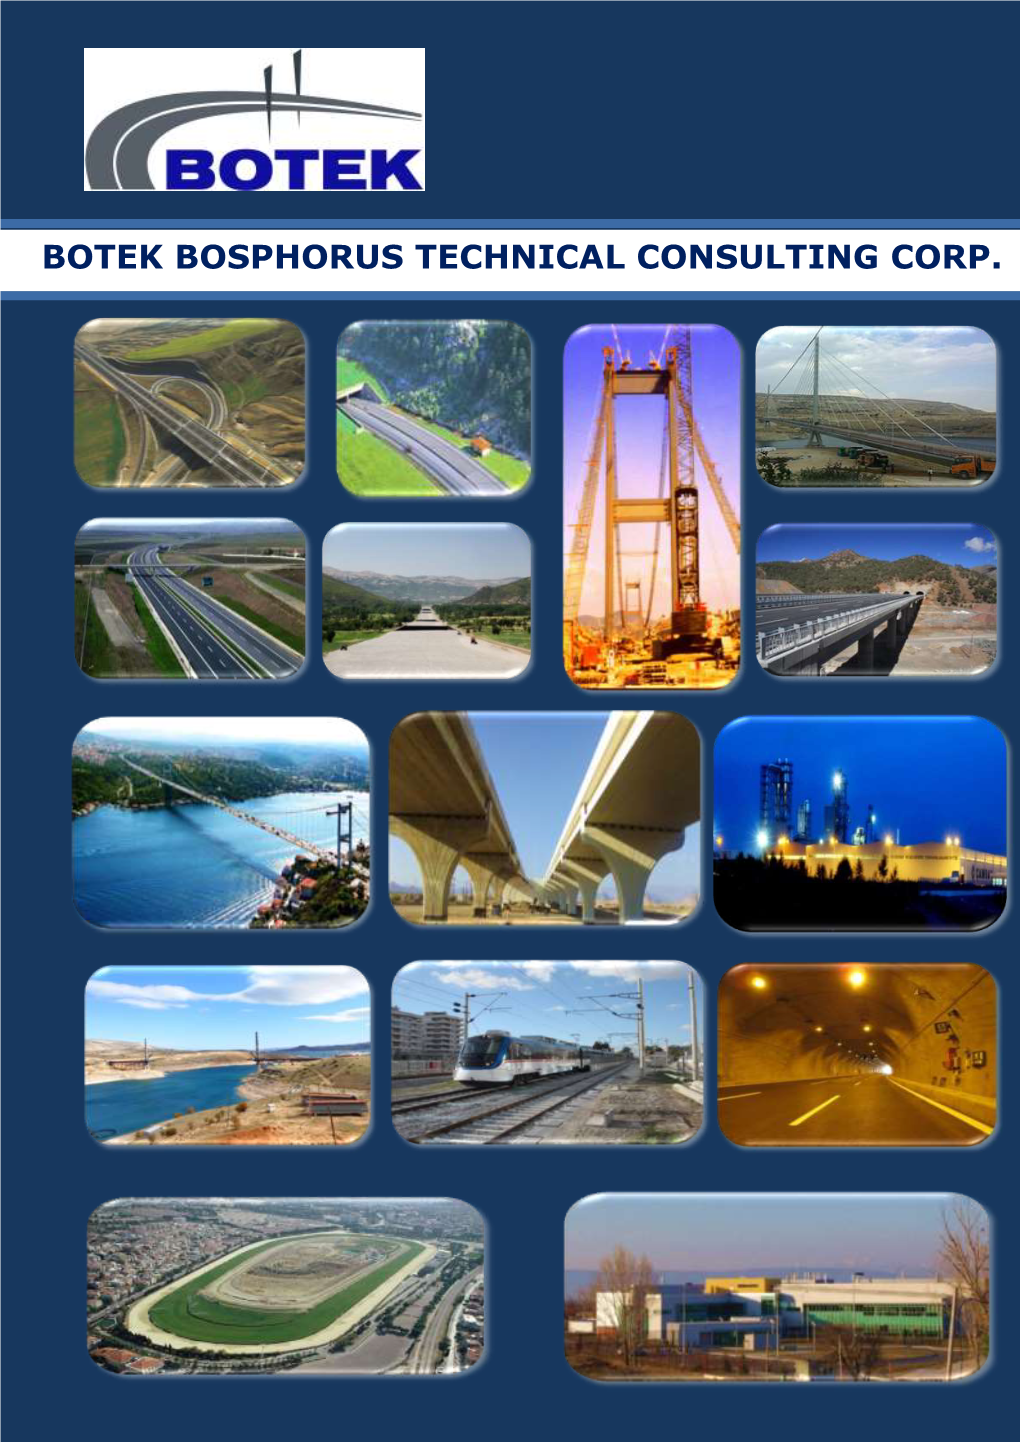 Botek Bosphorus Technical Consulting Corporation